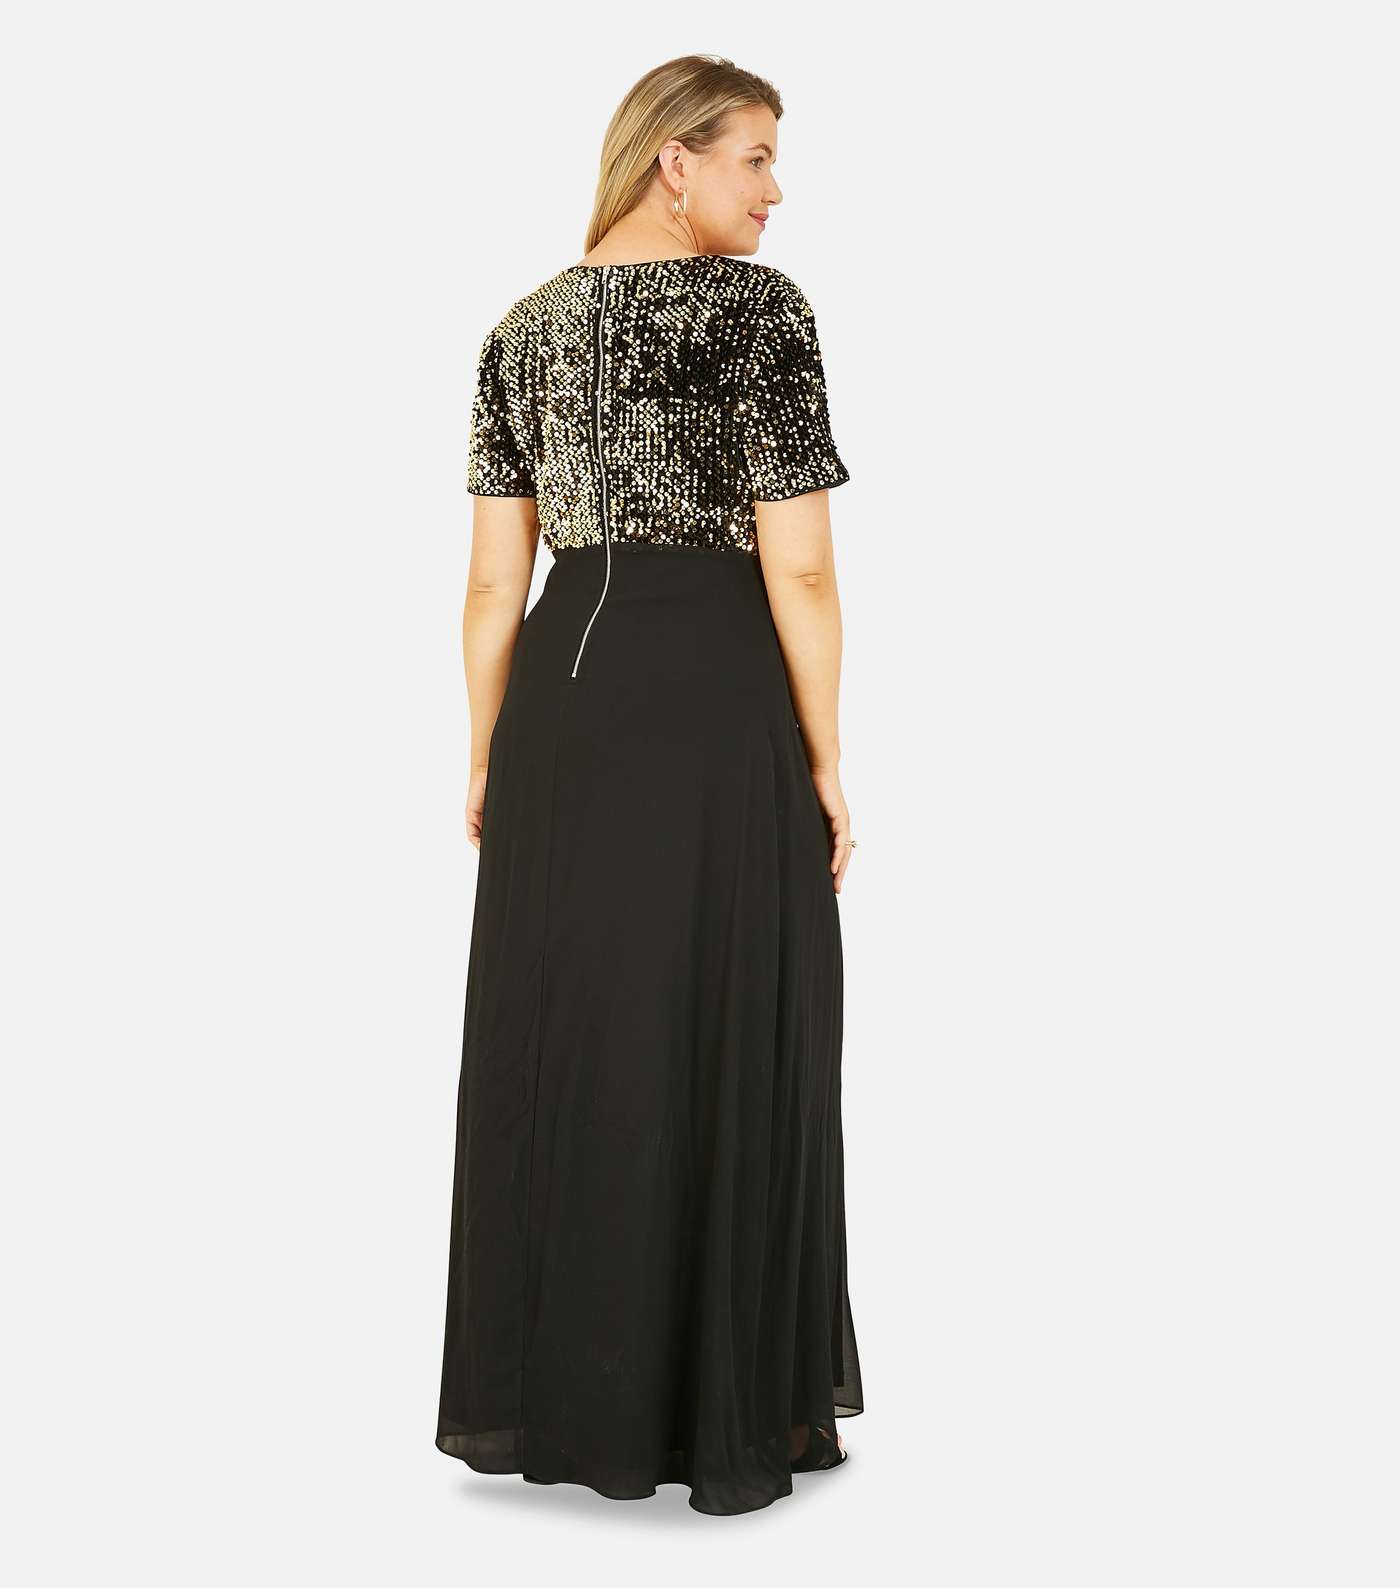 Mela Curves Black Gold Sequin Short Sleeve Maxi Dress Image 2